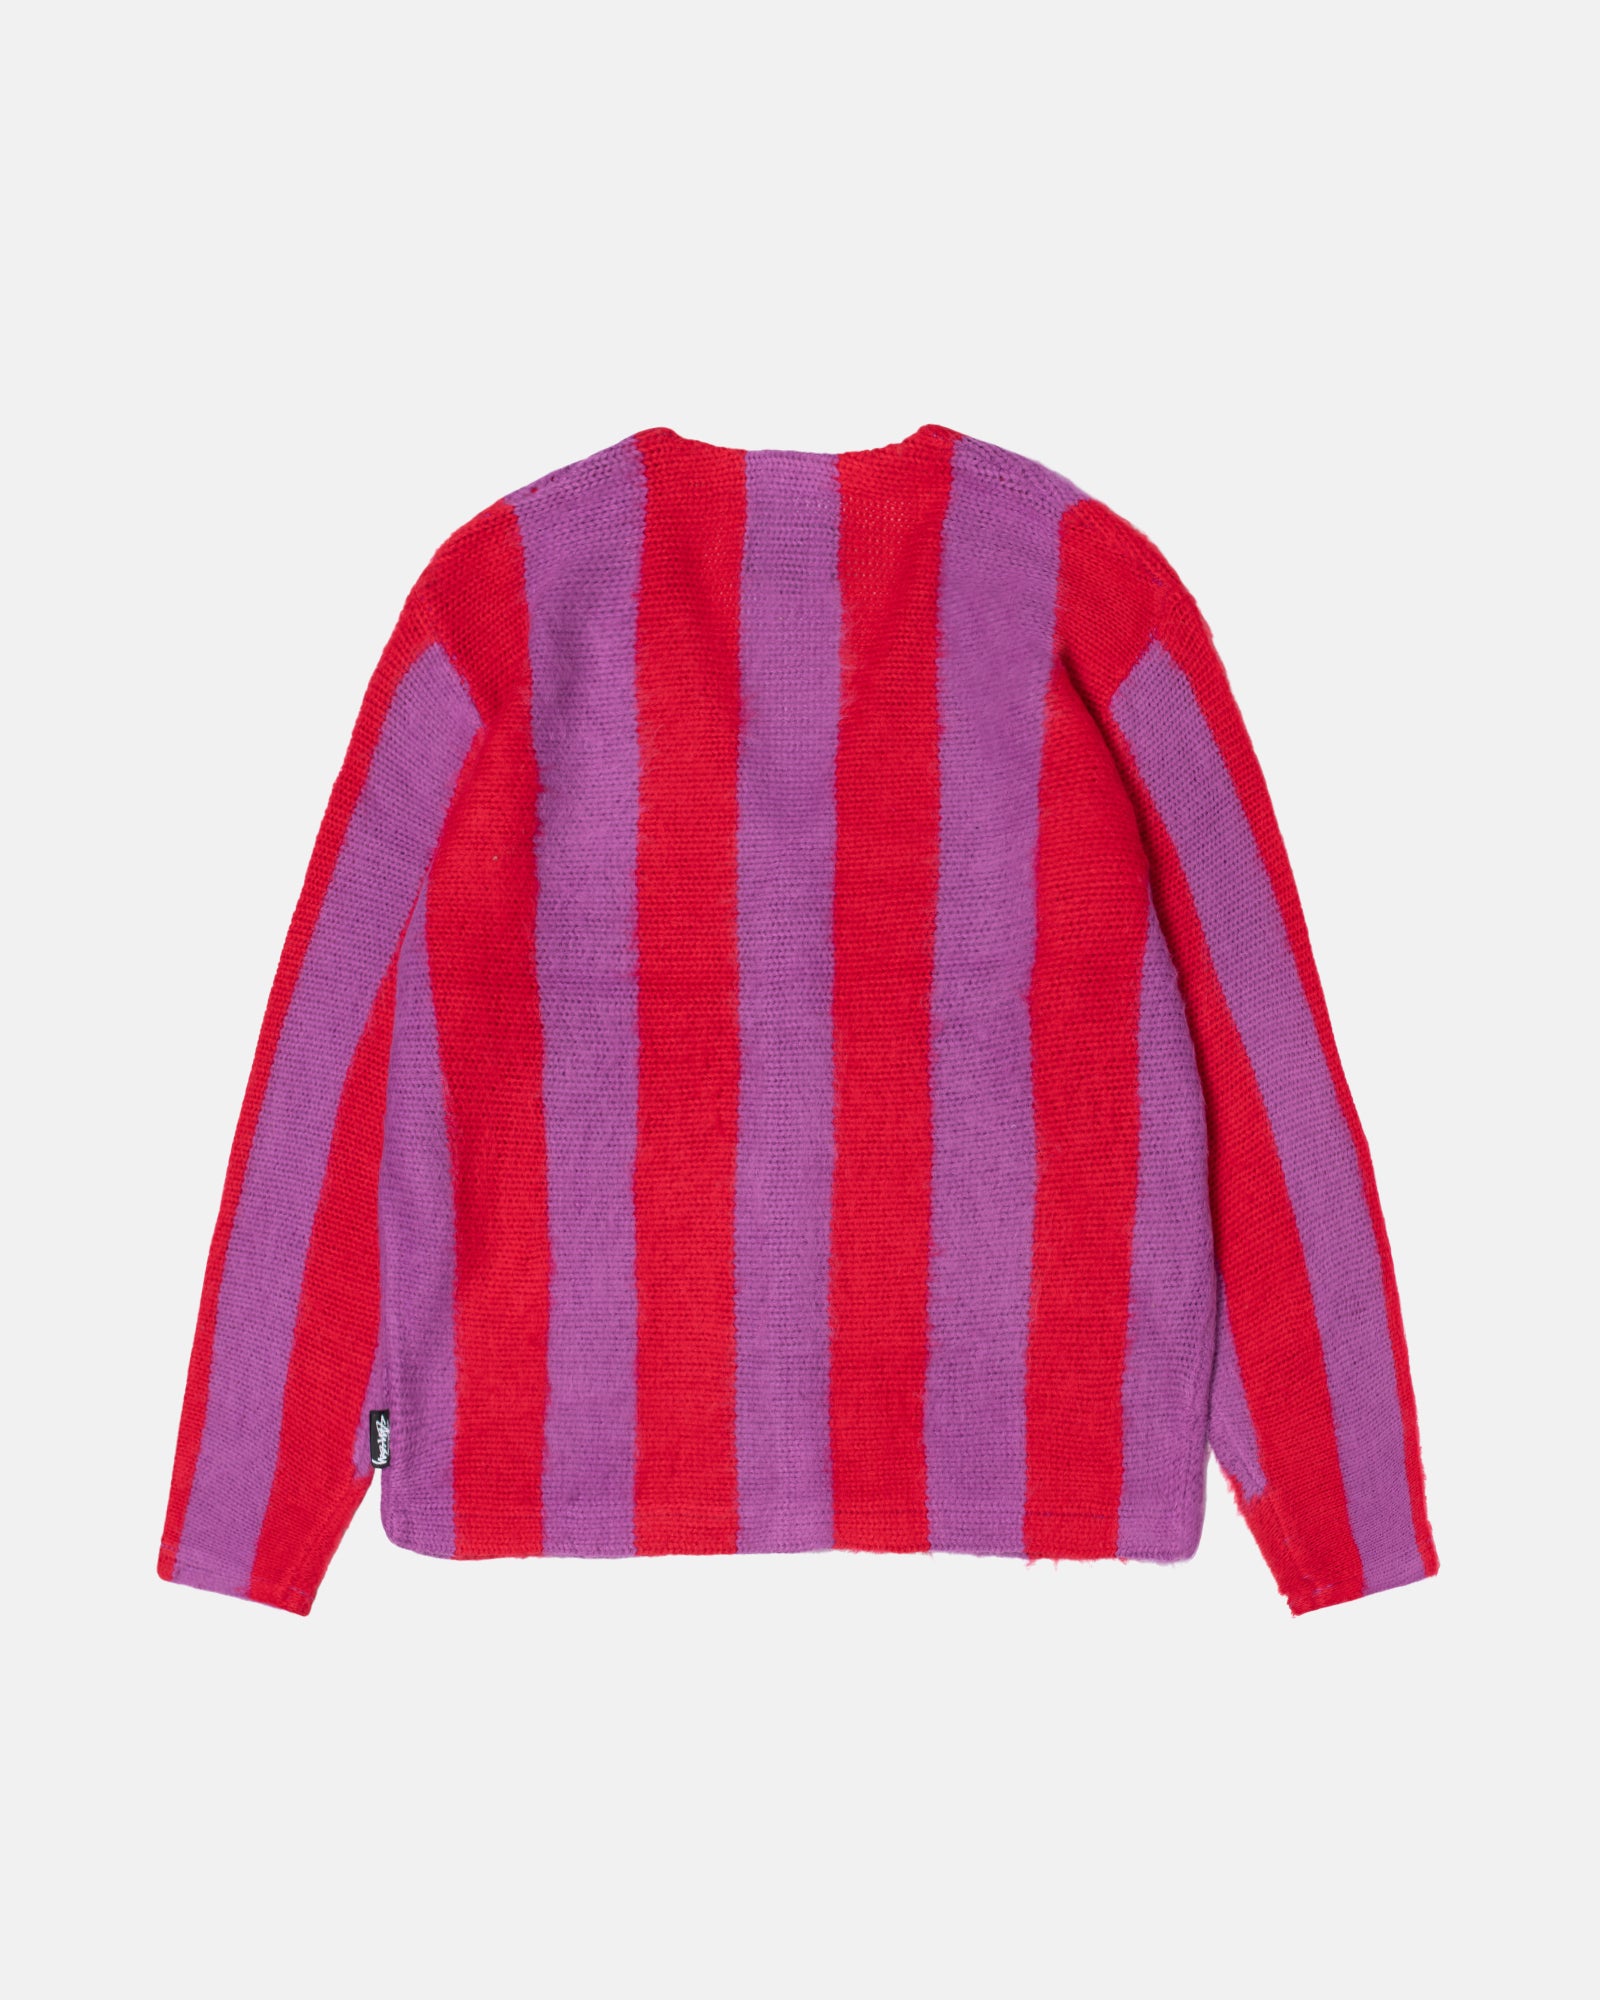 Knits: Cardigans, Sweaters & Vests by Stüssy